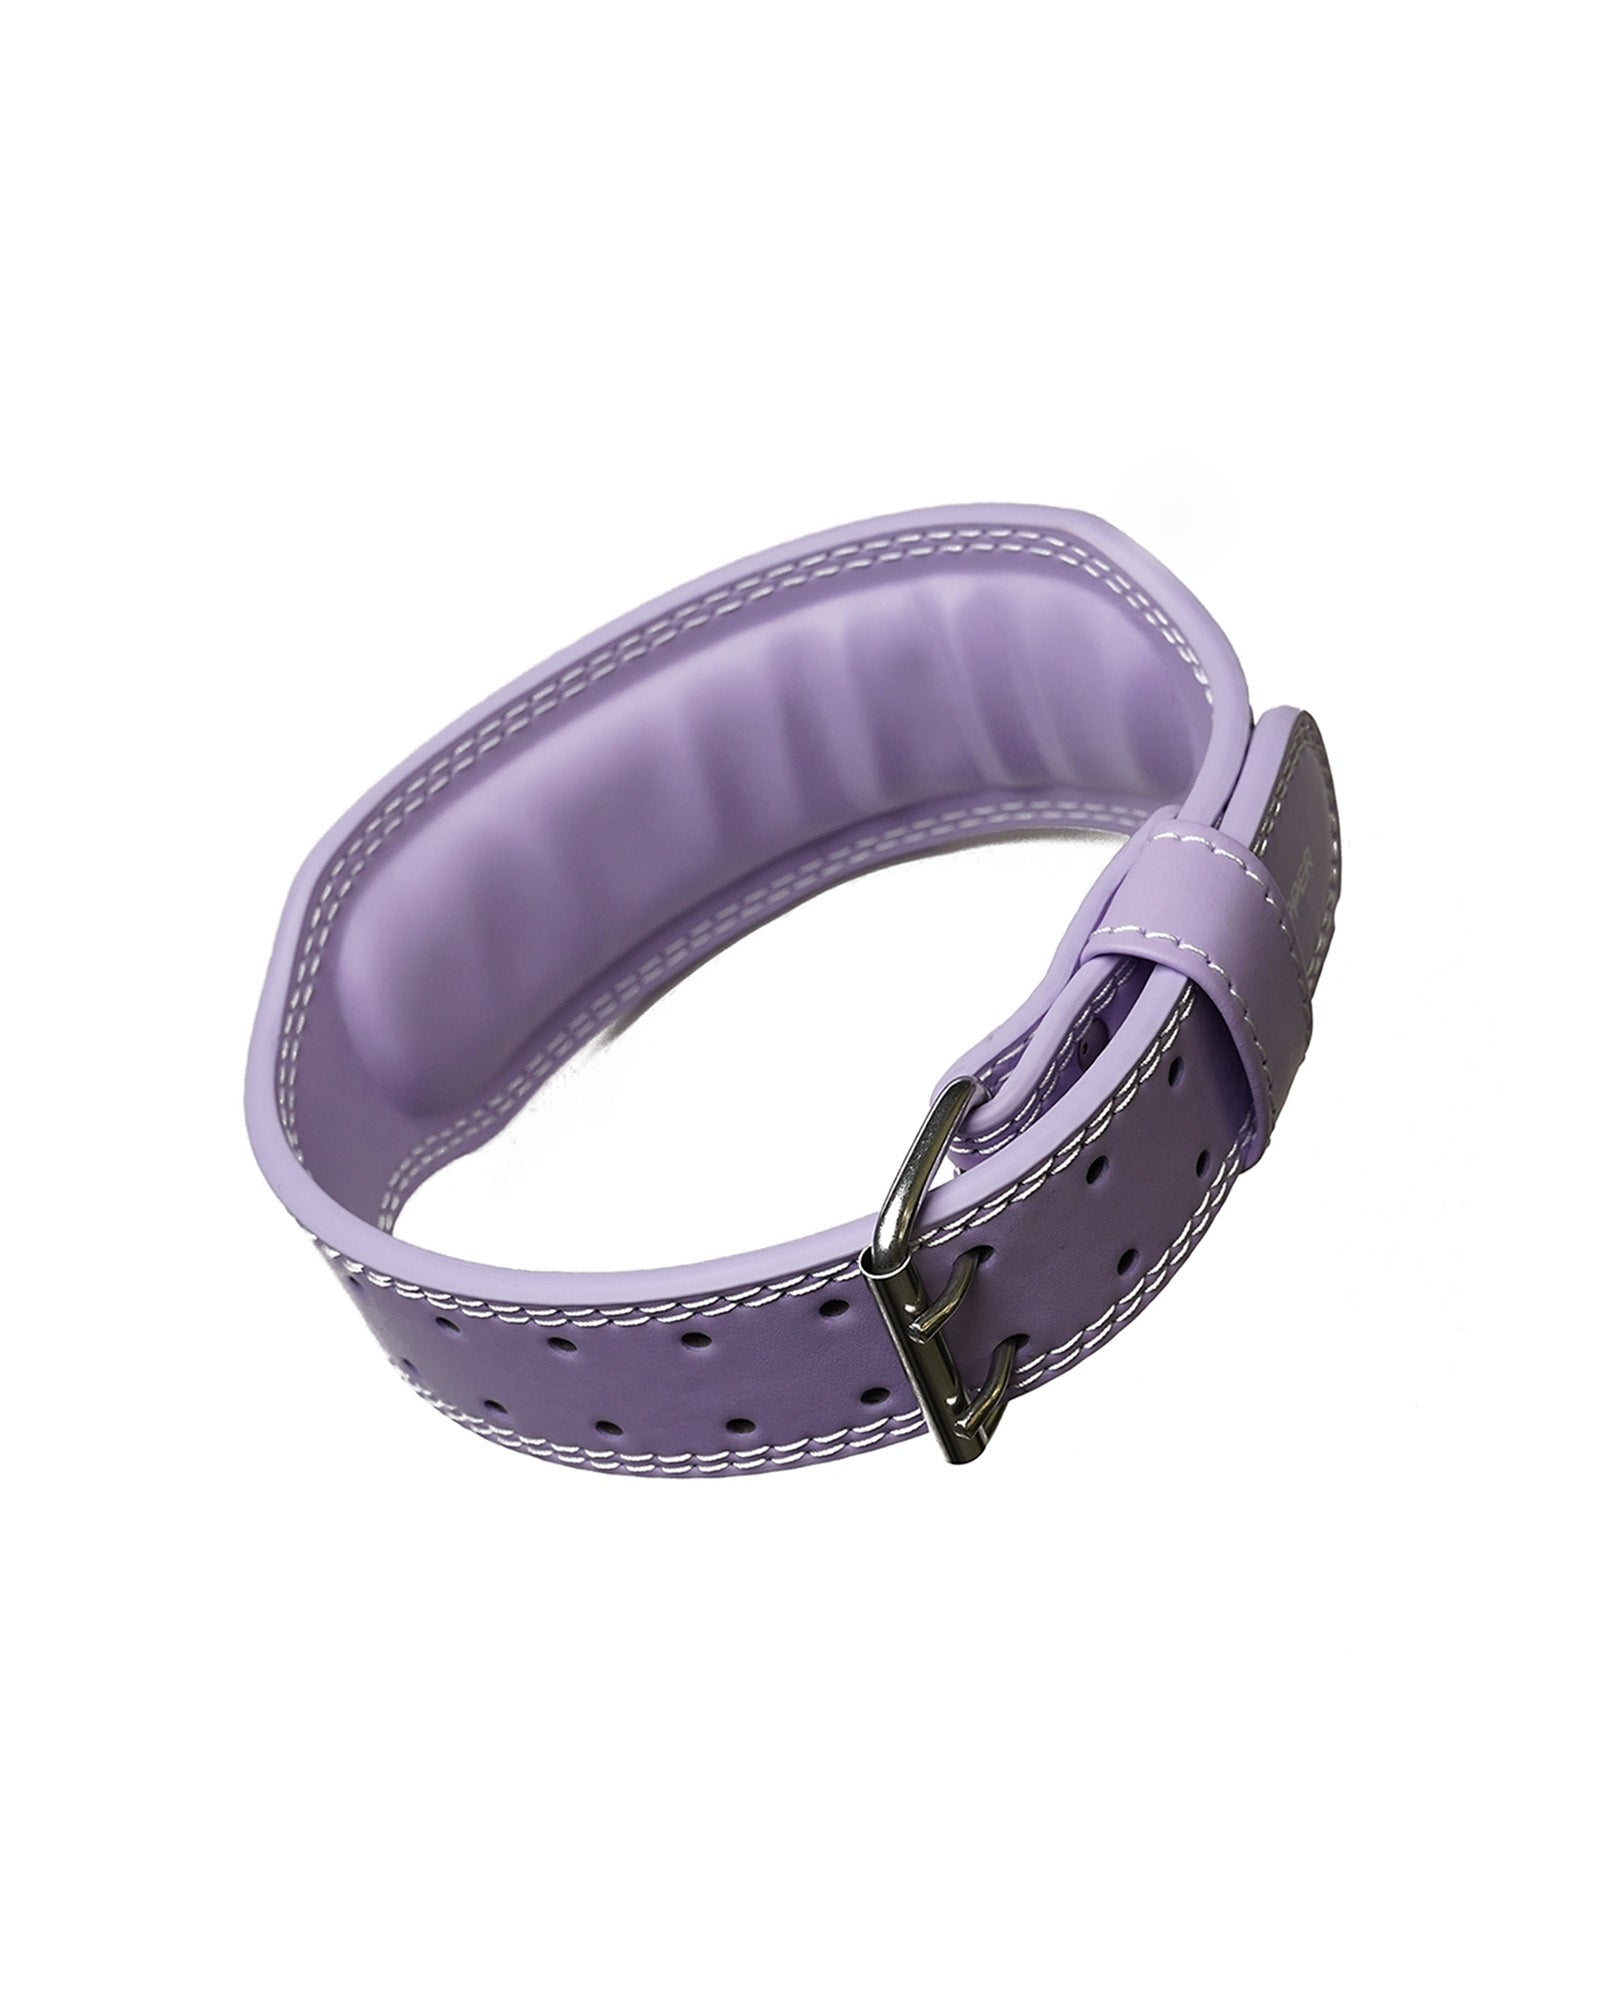 Lifting Belt Lavender